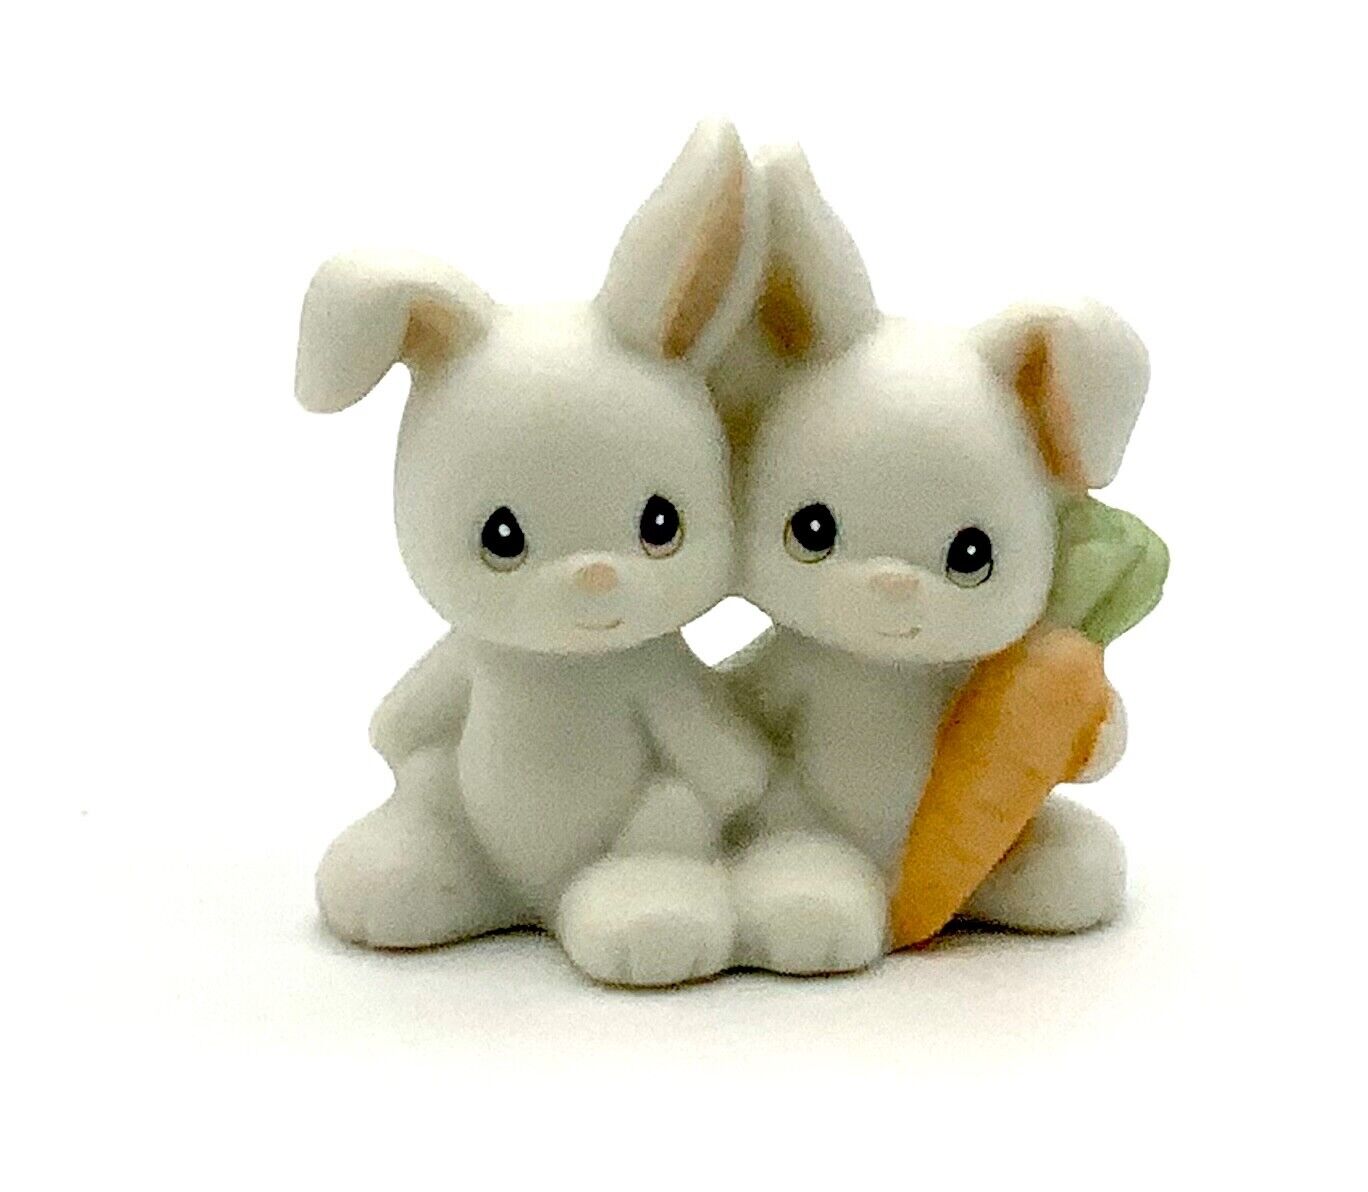 Precious Moments Two By Two Bunnies Figurine 530123 w/ Original Box 1992